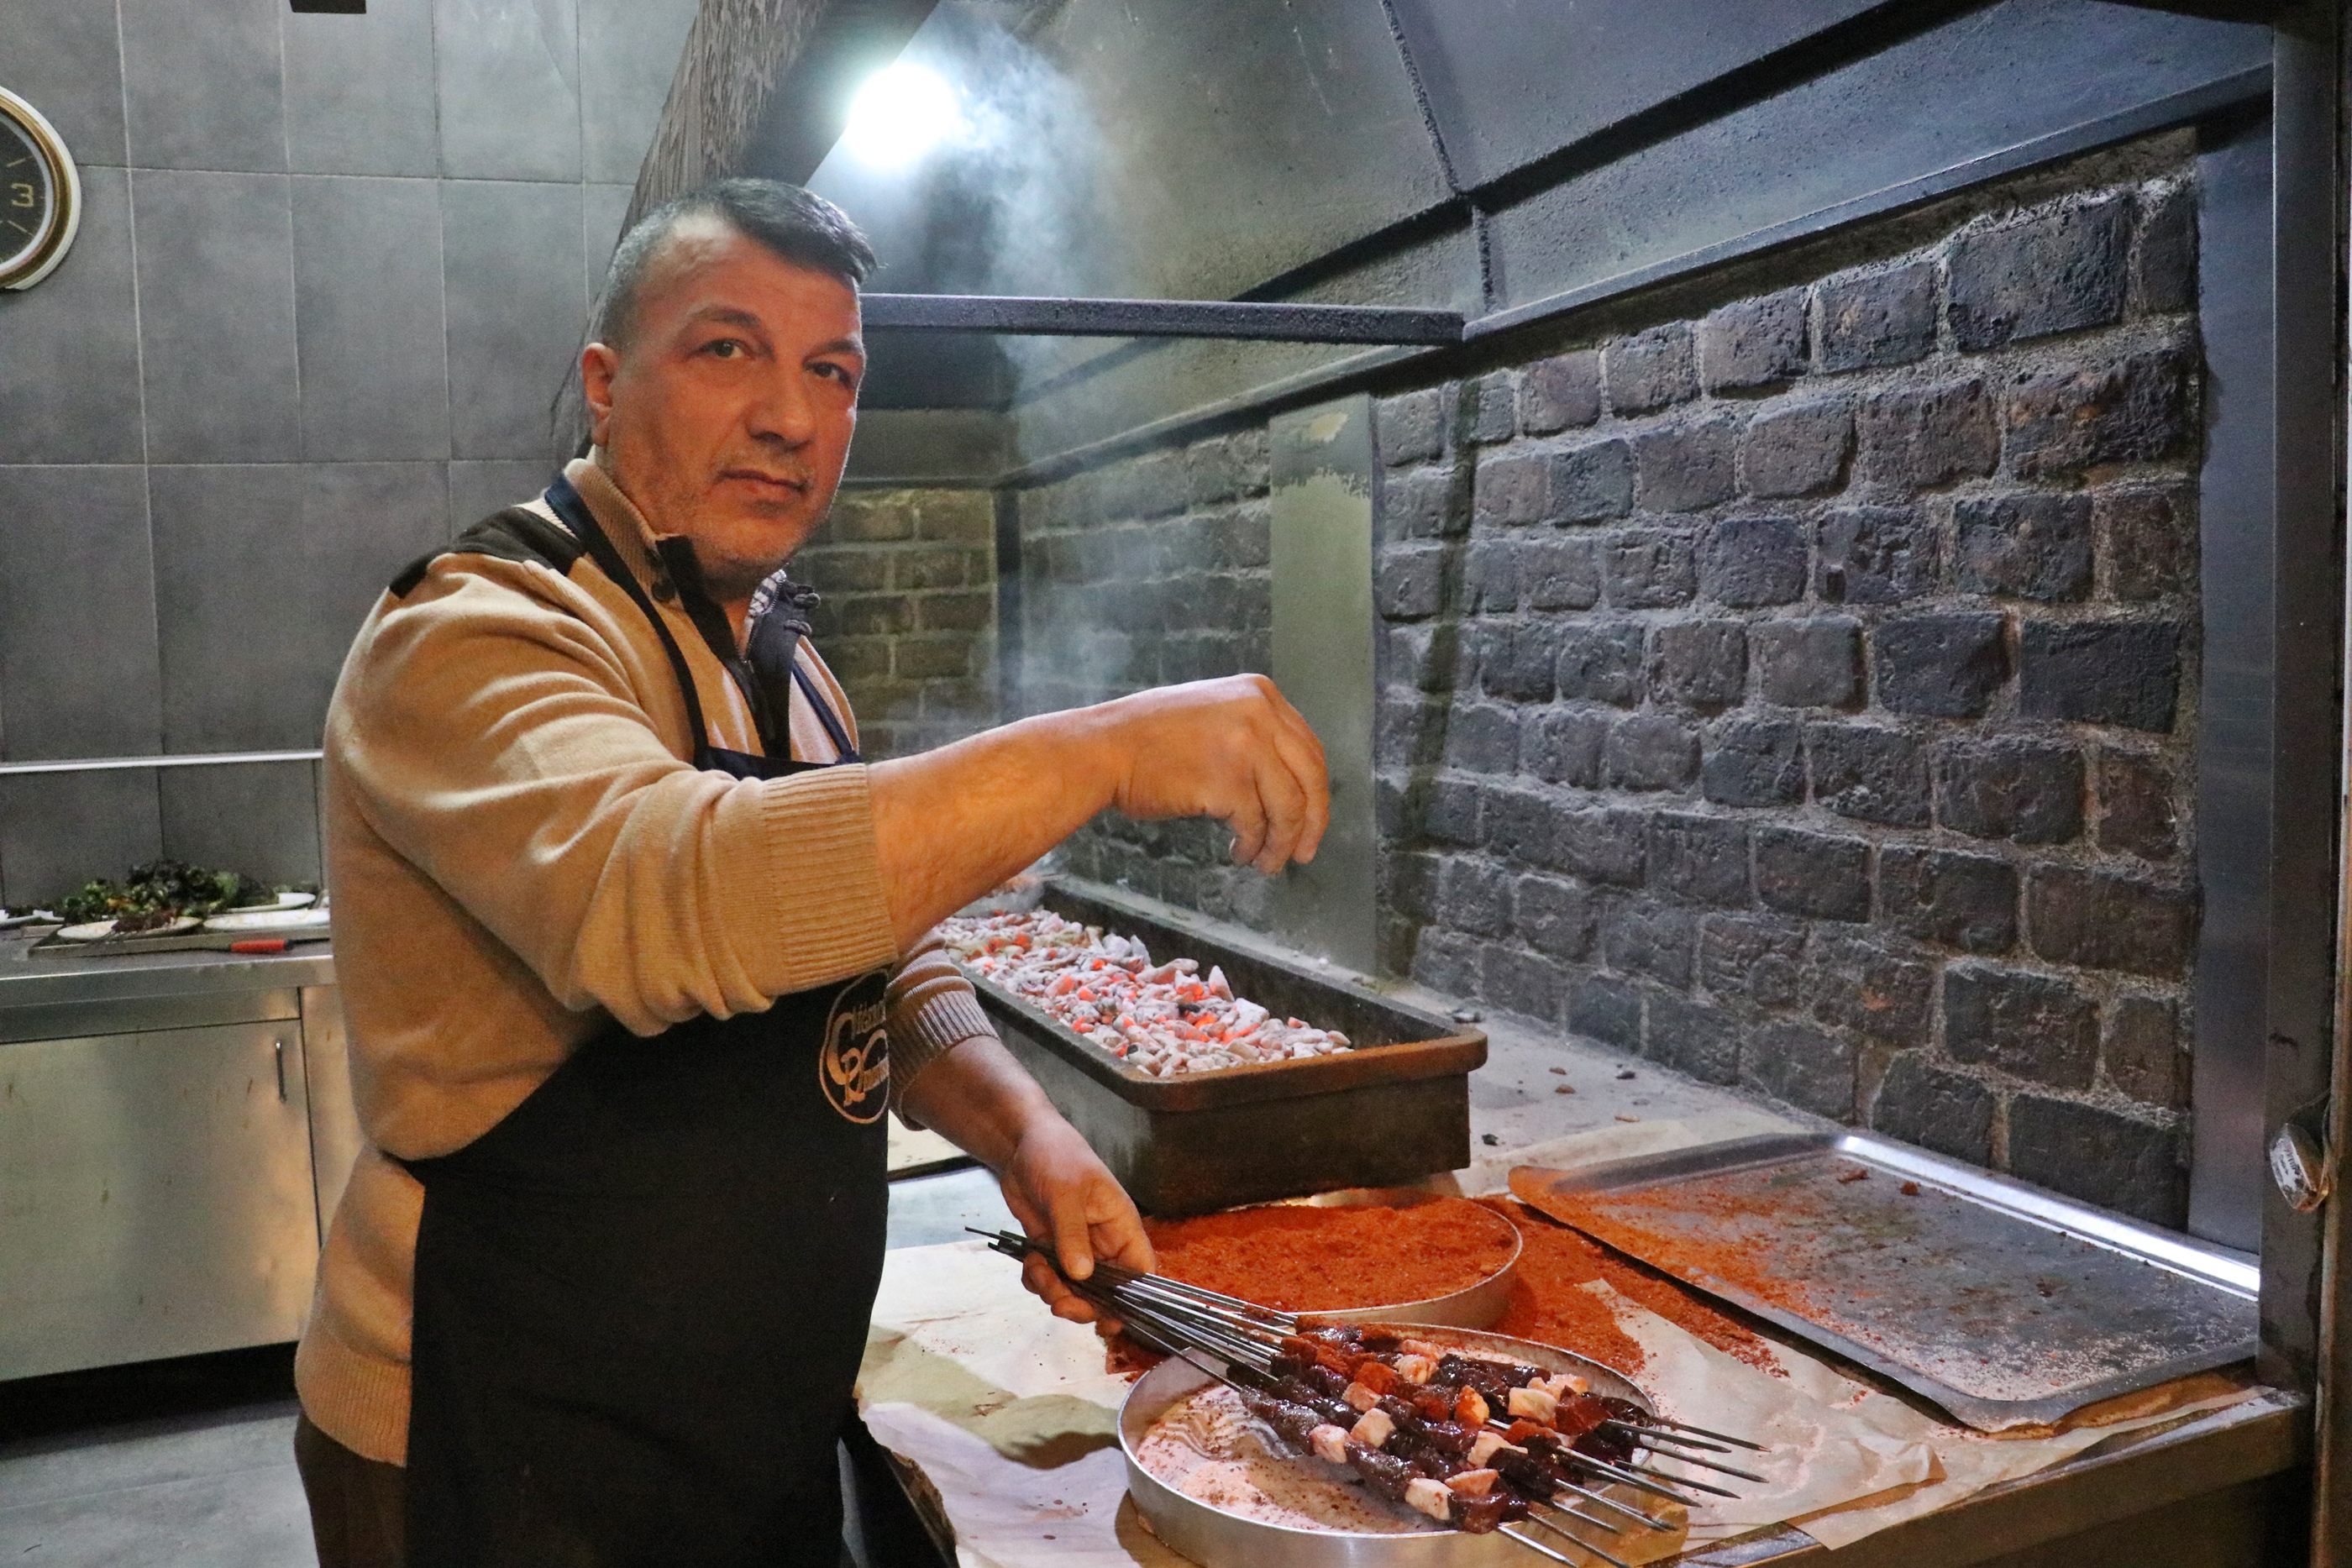 diyarbakirda-kuzu-cigerin-fiyati-eti-gecti-kasapta-kilosu-420-tl-1151-dhaphoto5.jpg